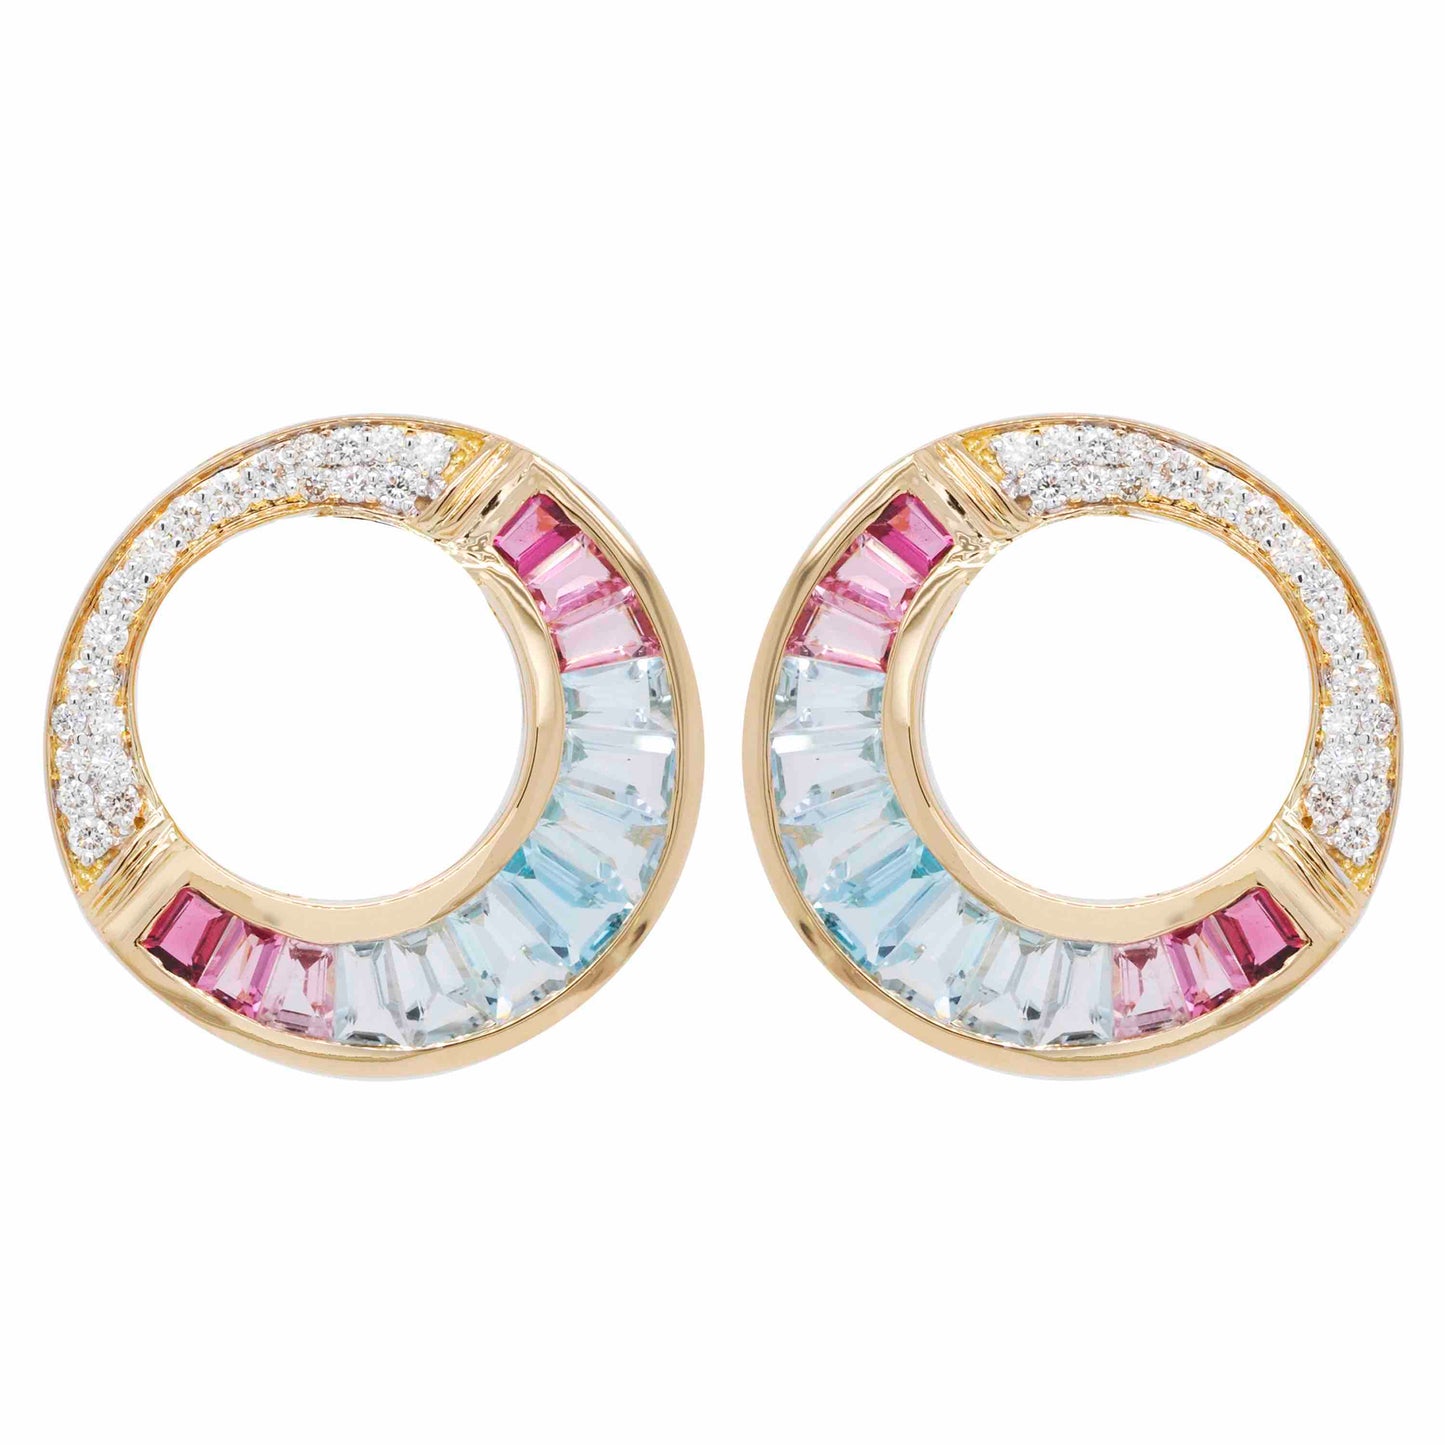 Aquamarine pink tourmaline earrings